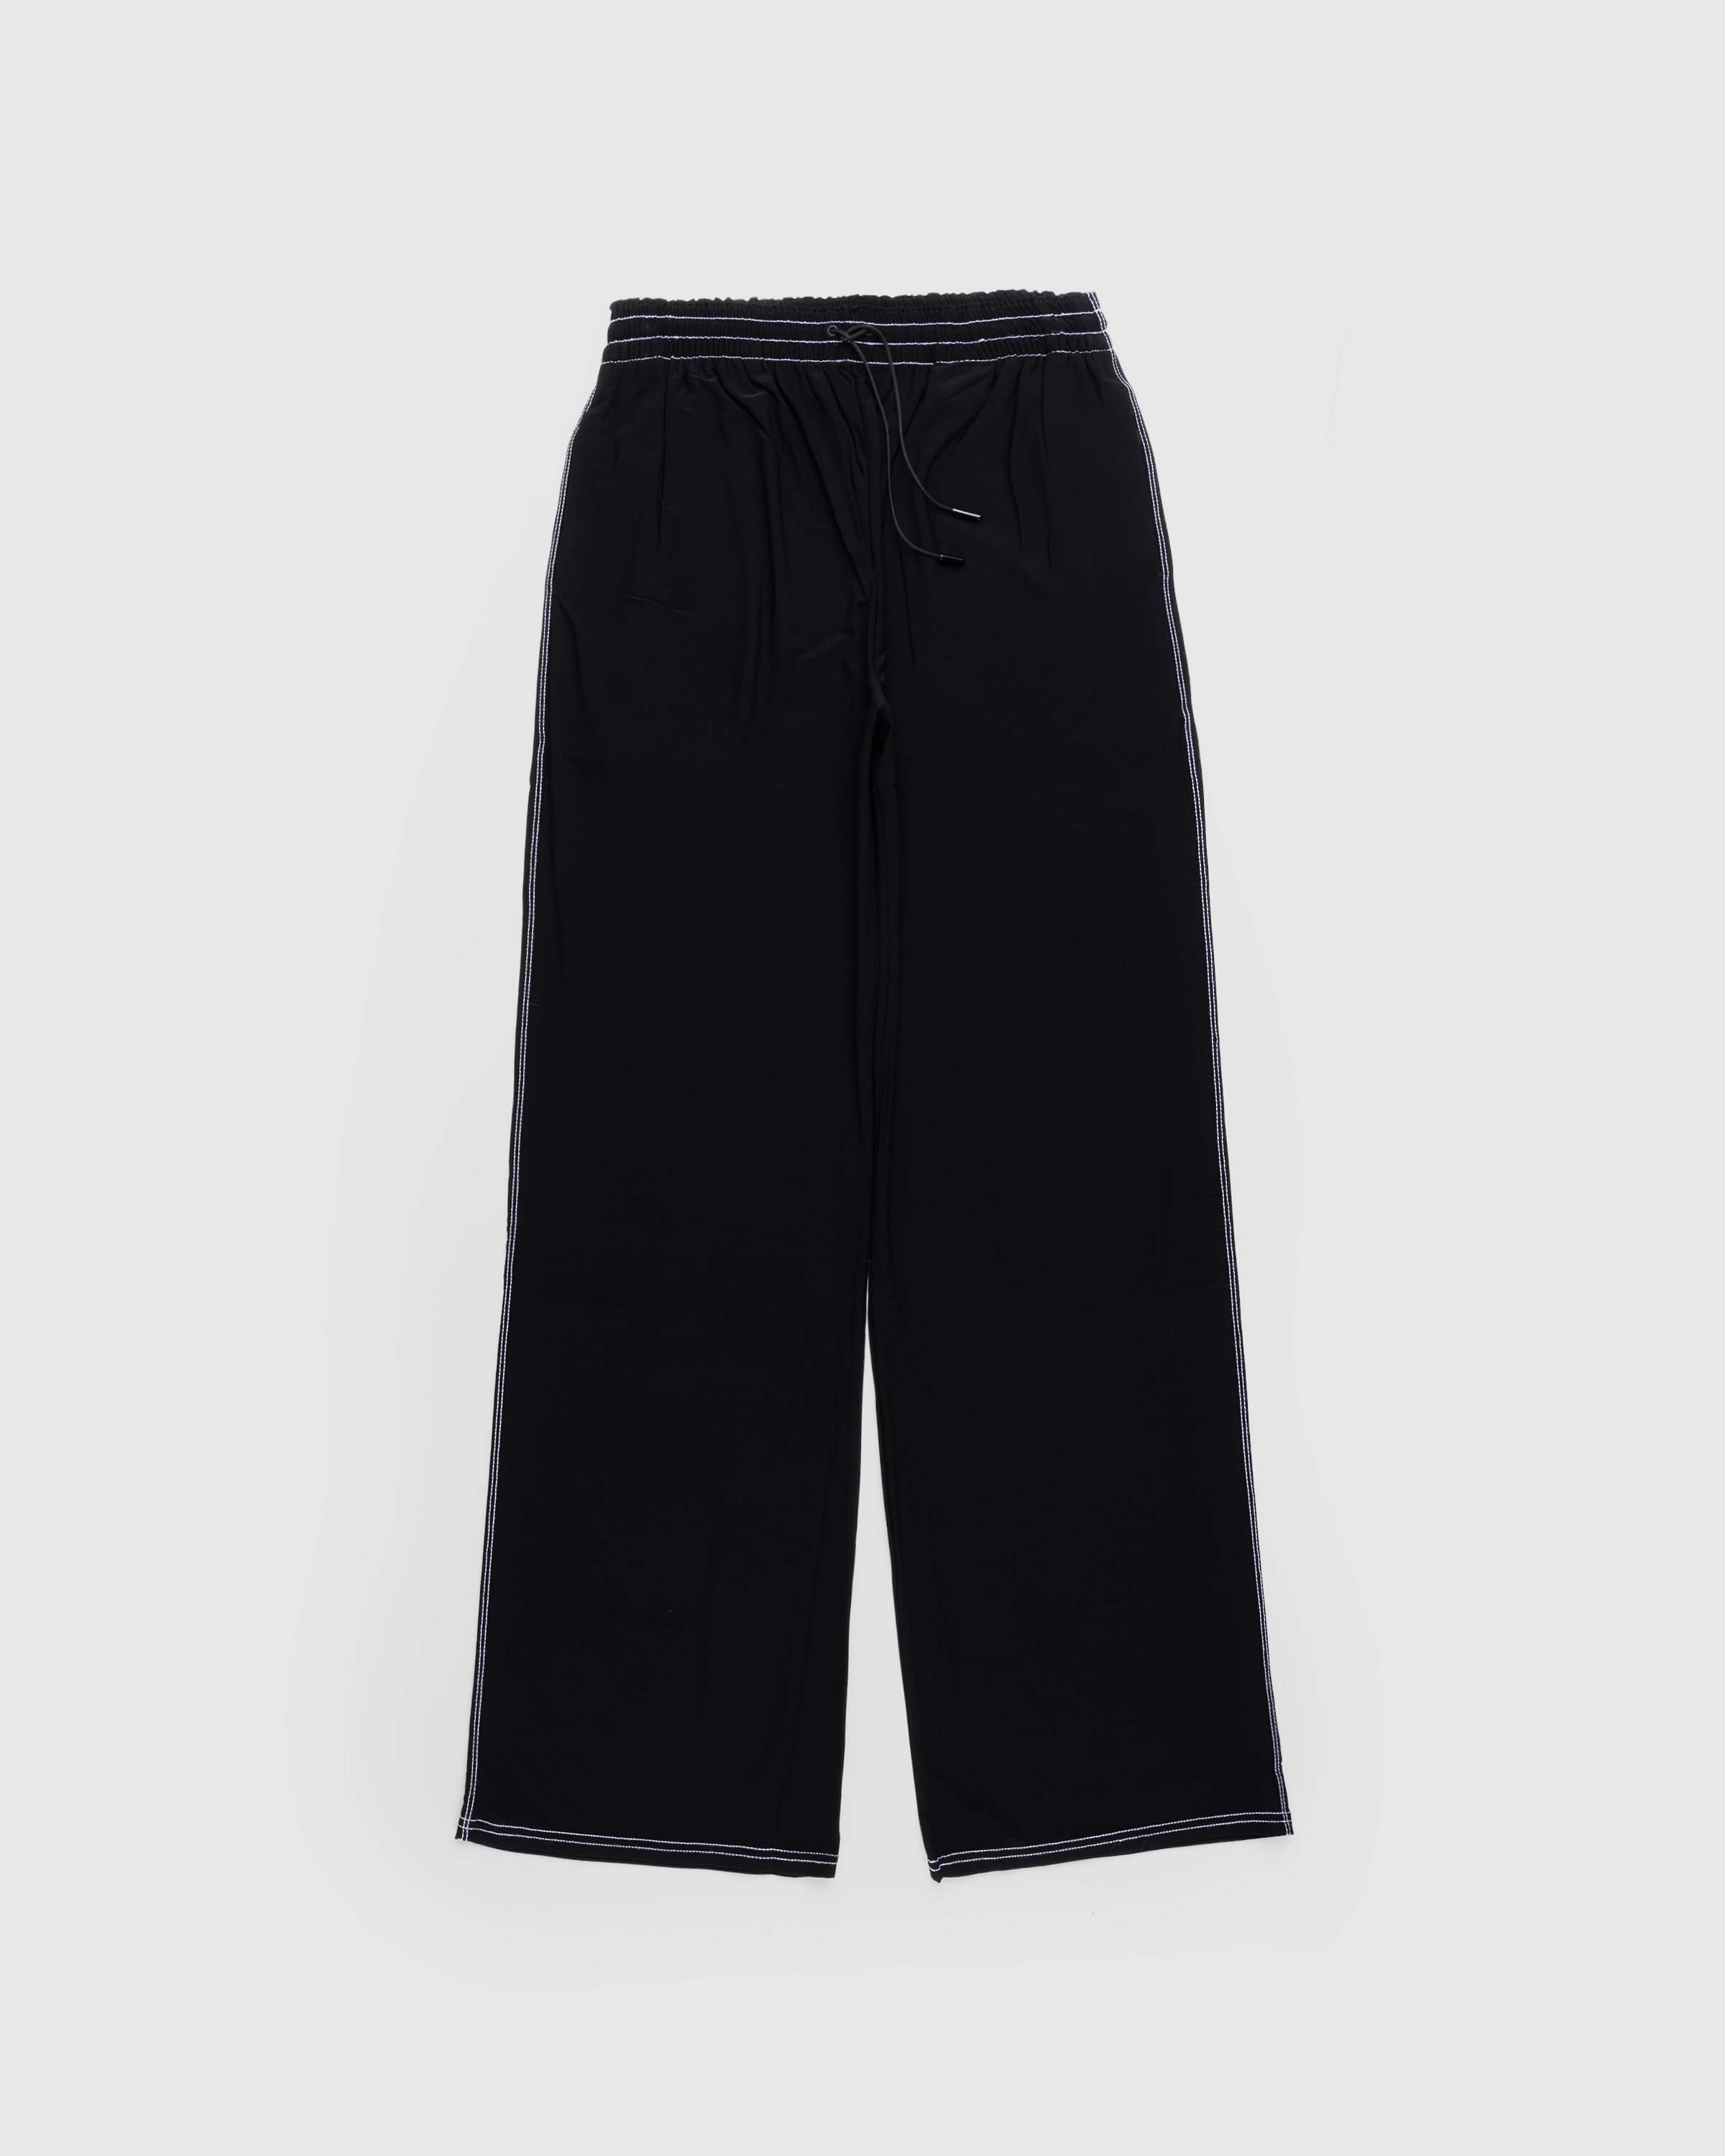 Marine Serre - Fluid Jersey Baggy Pants Black - Clothing - undefined - Image 1